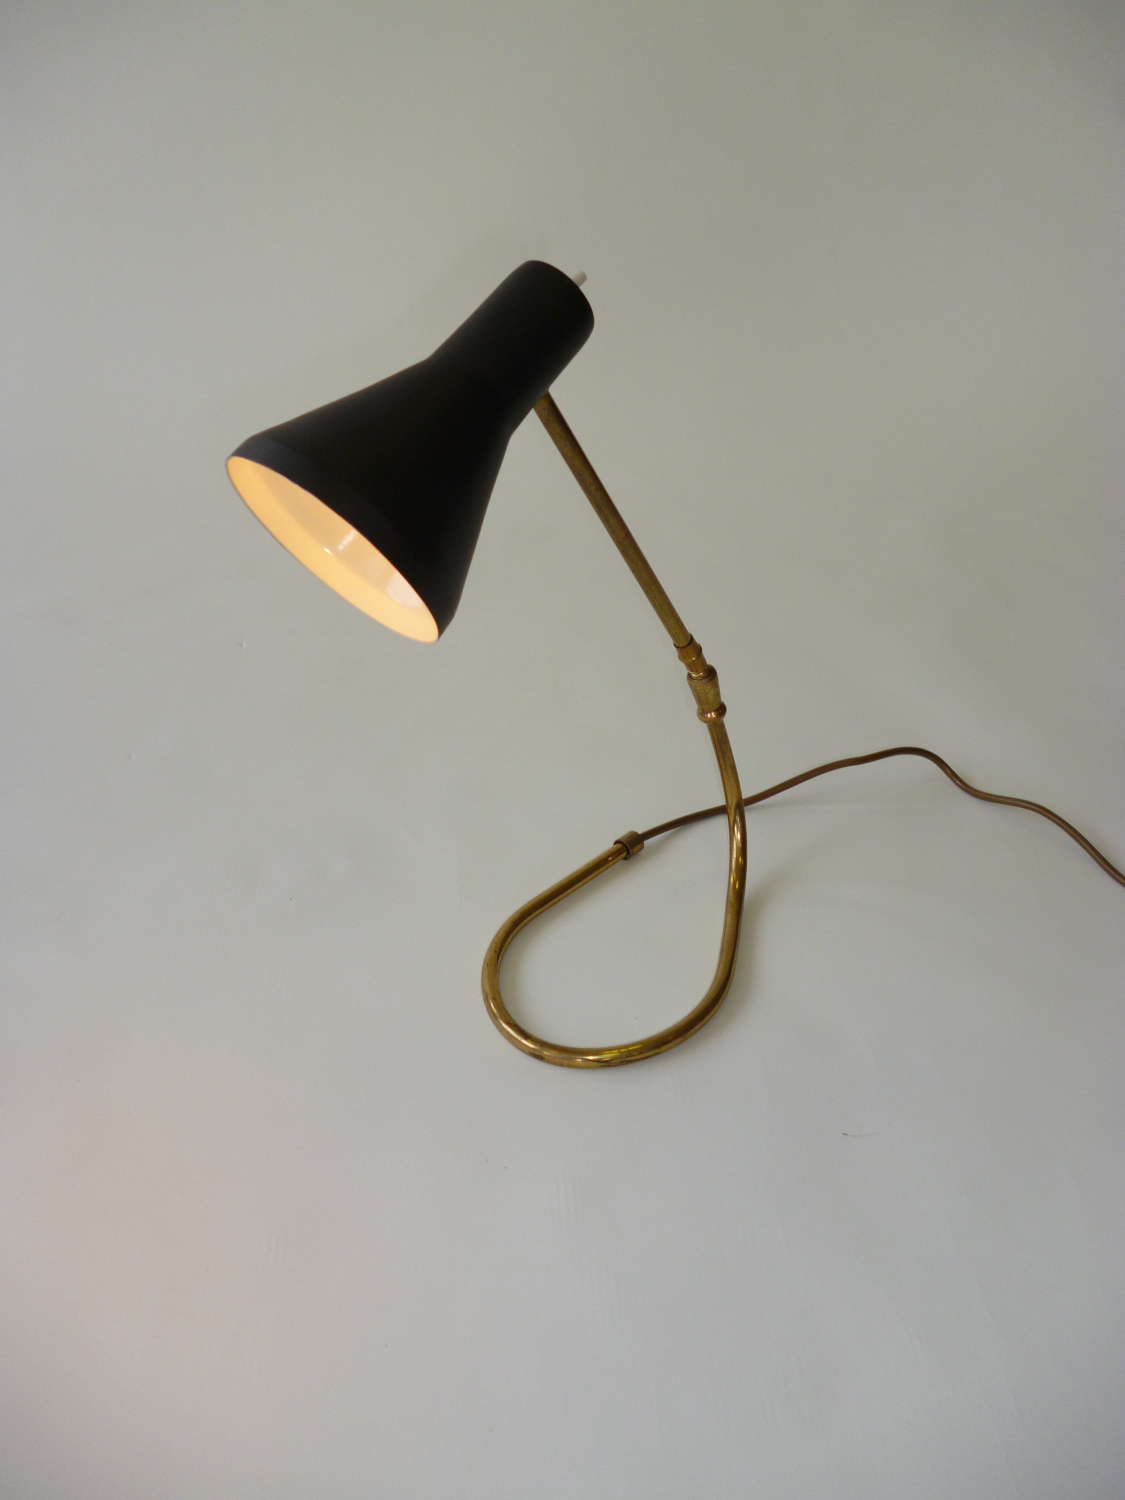 Black Lacquered Desk Lamp